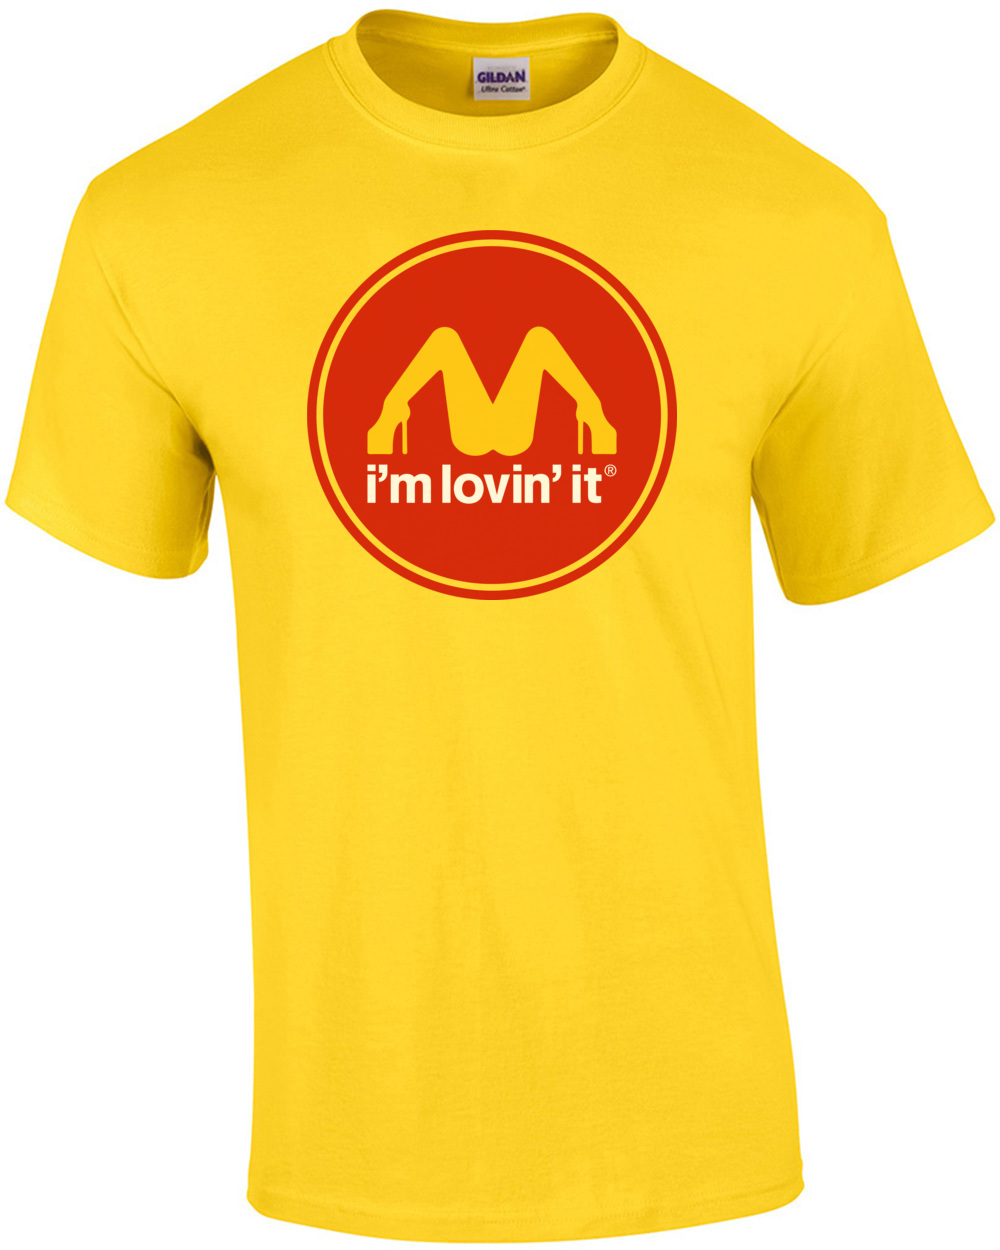 I'm Lovin' It - Mcdonald's Parody T-shirt | eBay